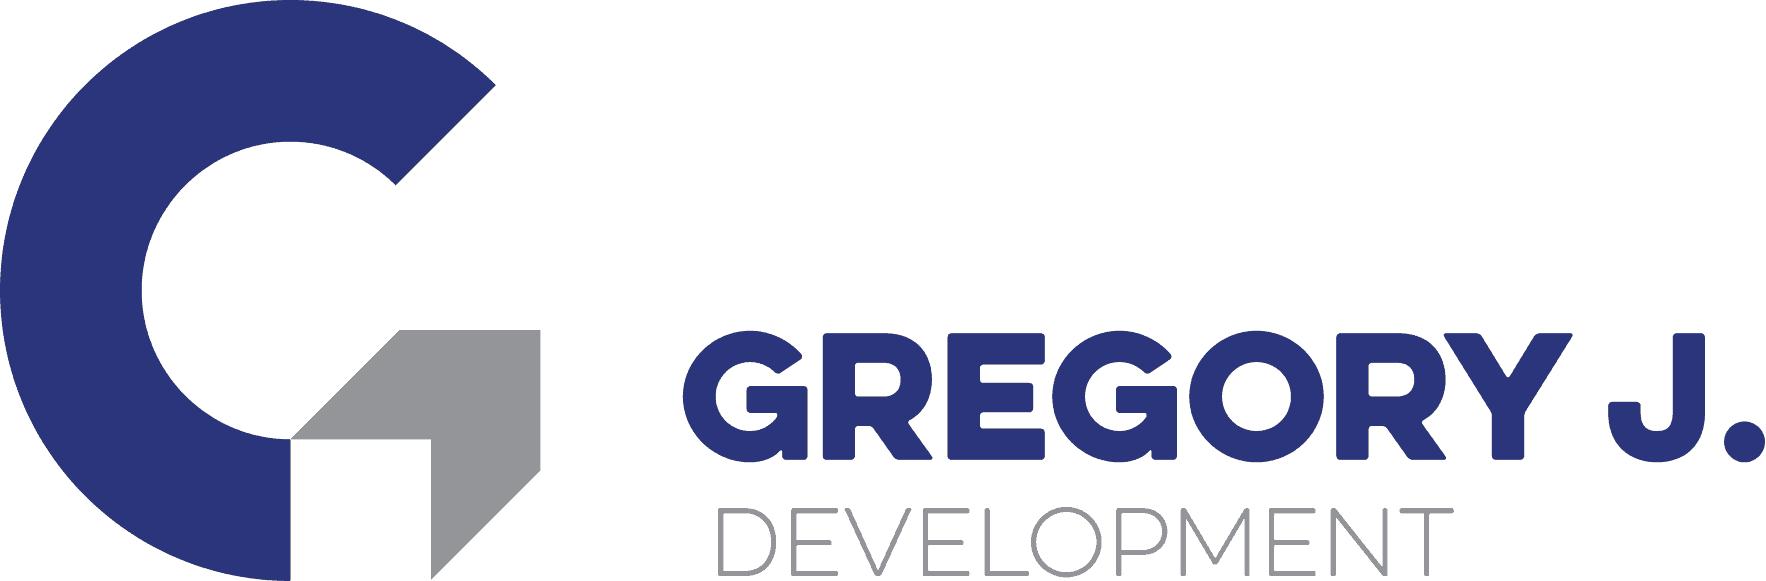 Gregory Logo - Durham Region based WordPress help – Gregory J Development